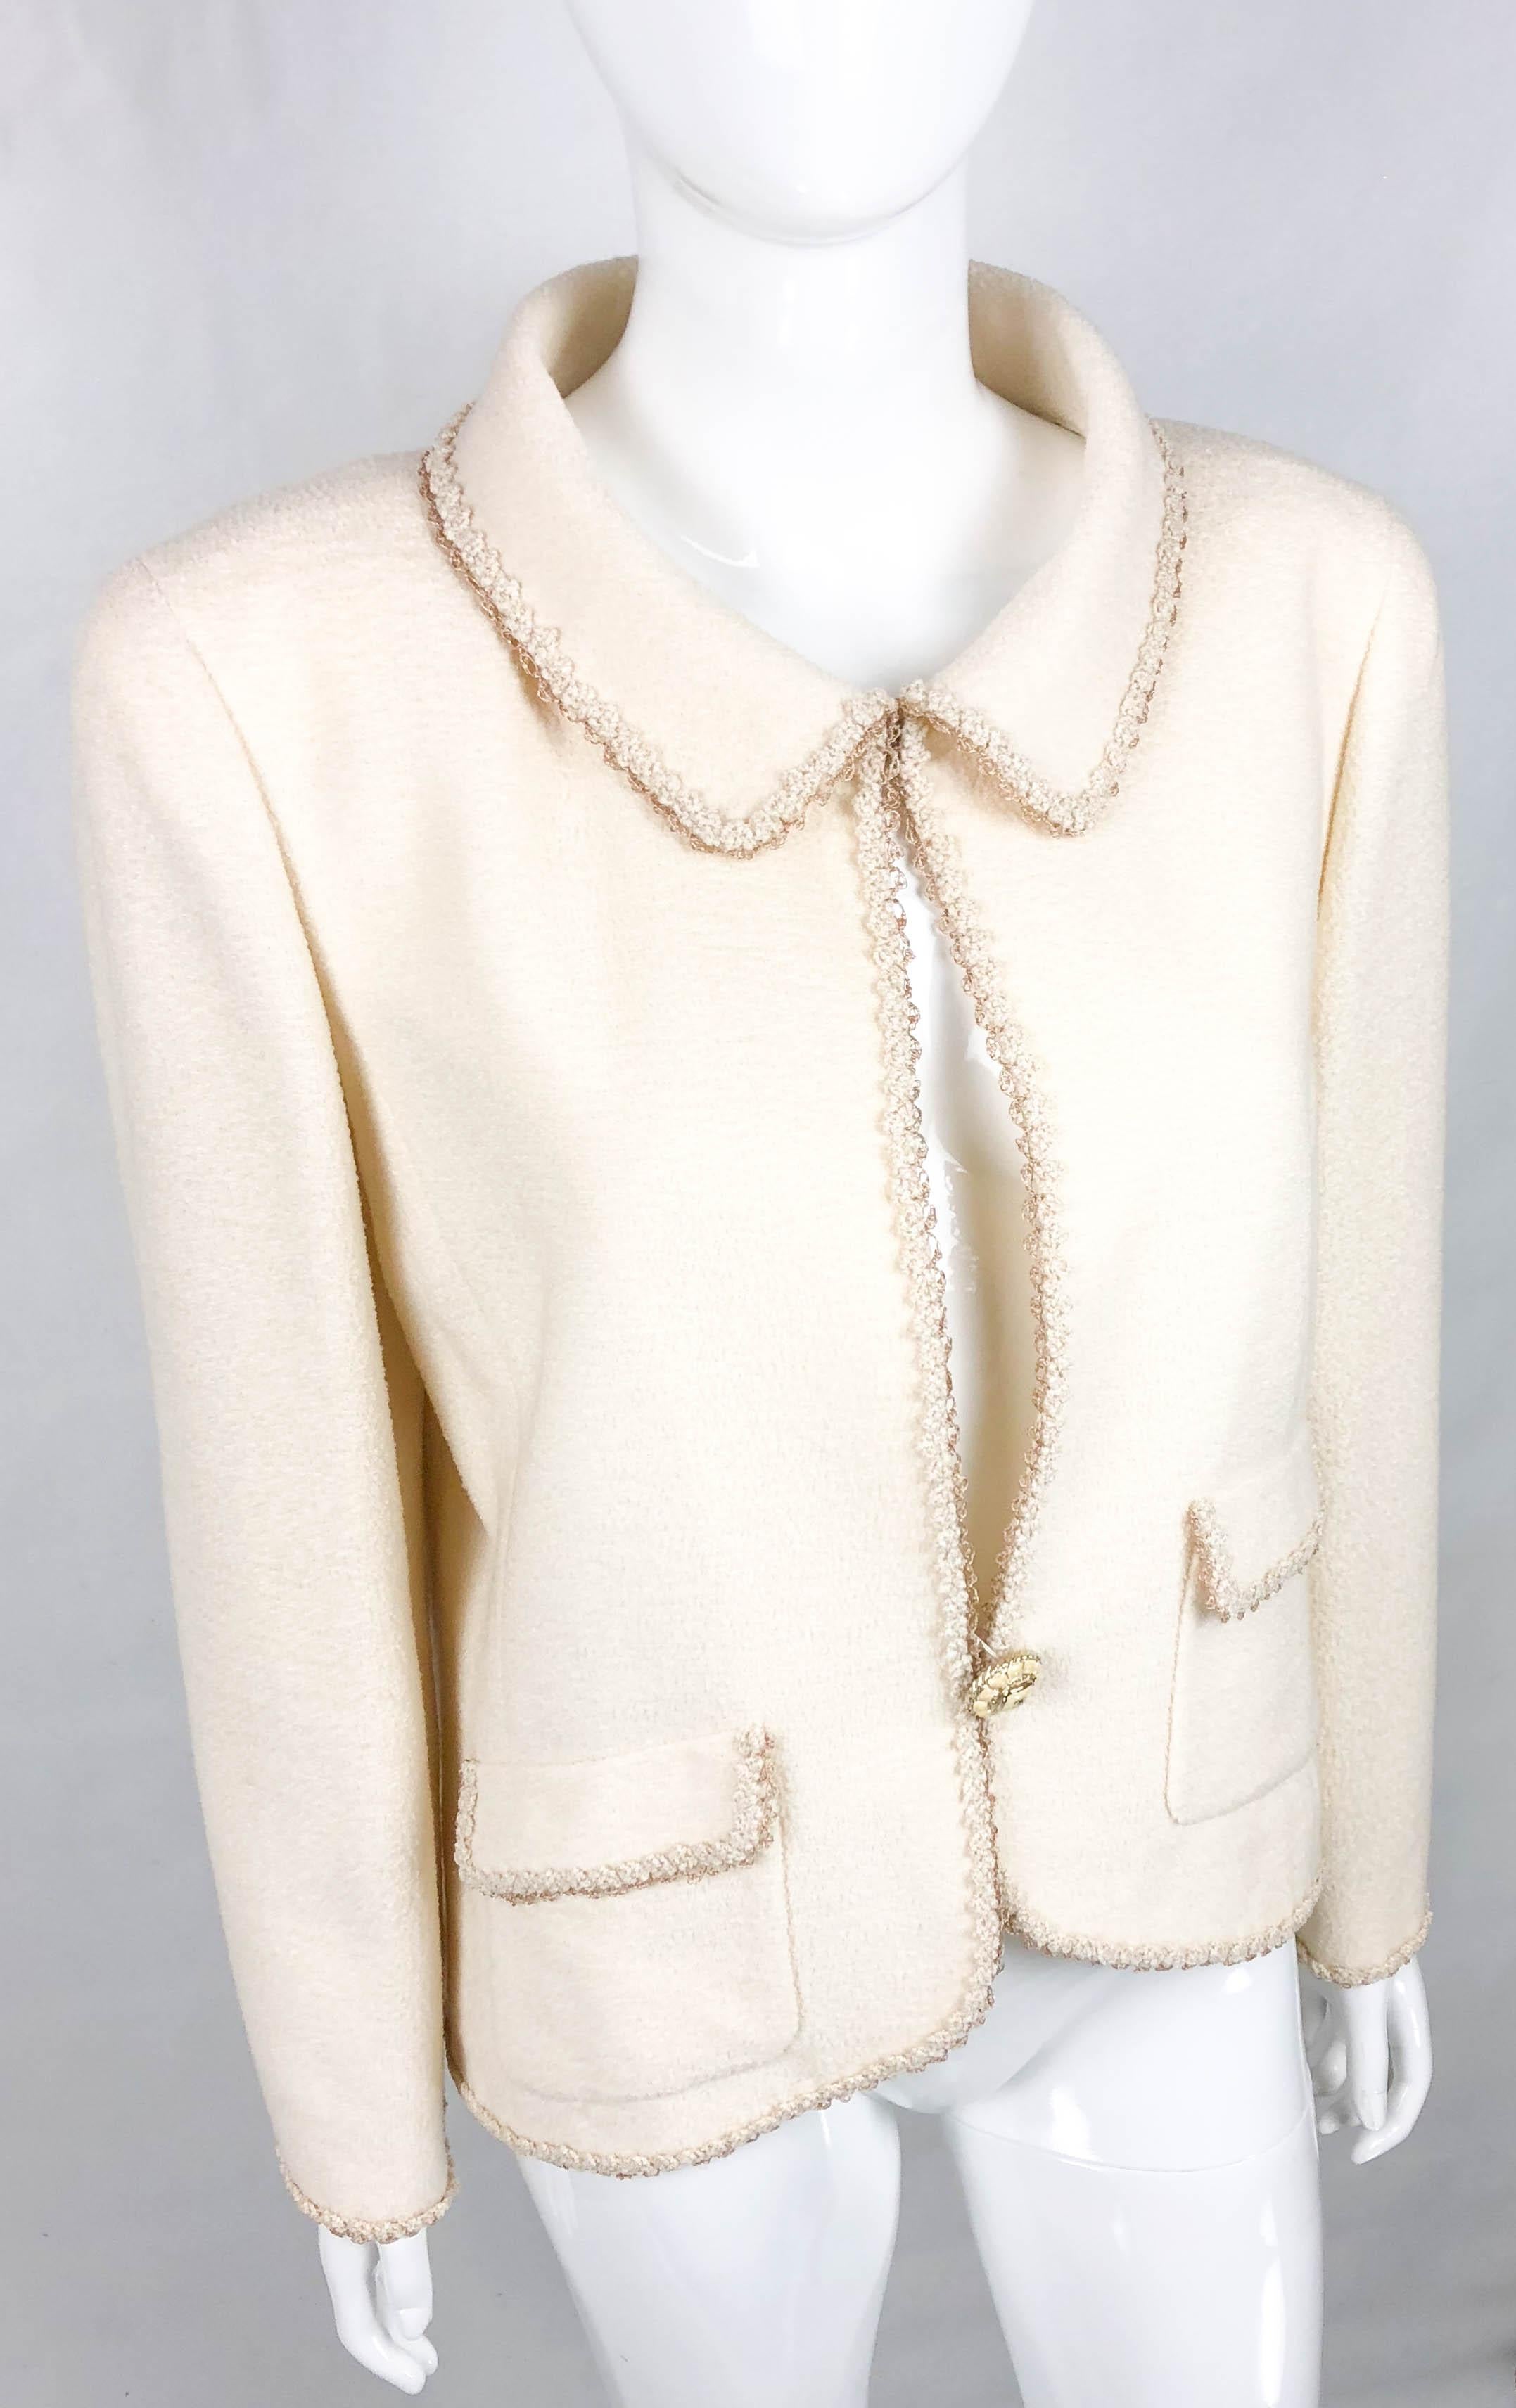 2010 Chanel Unworn Runway Look Cream Jacket With Gold Thread Trim For Sale 2